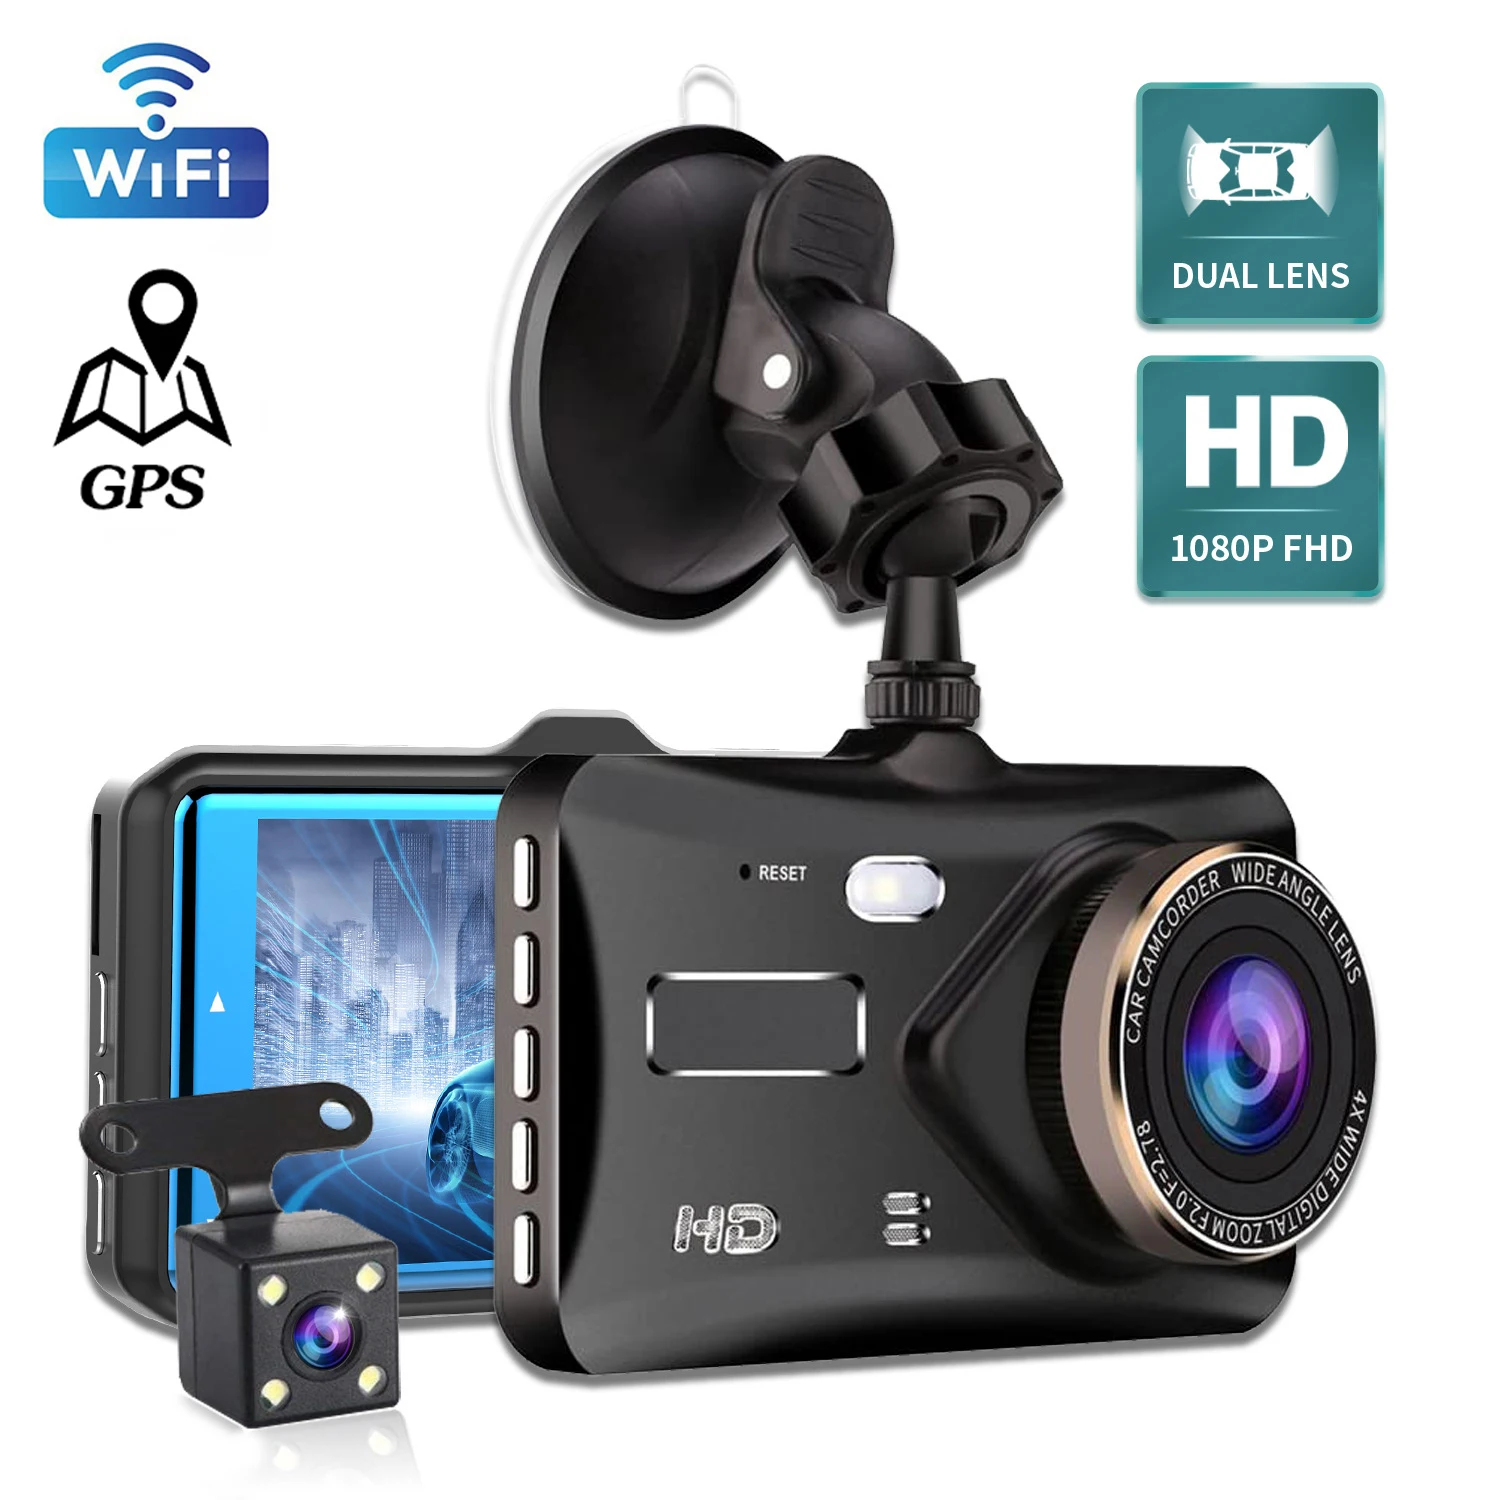 Car DVR WiFi Full HD 1080P Dash Cam Rear View Vehicle Video Recorder Auto Dash Camera Parking Monitor Night Vision G-sensor GPS